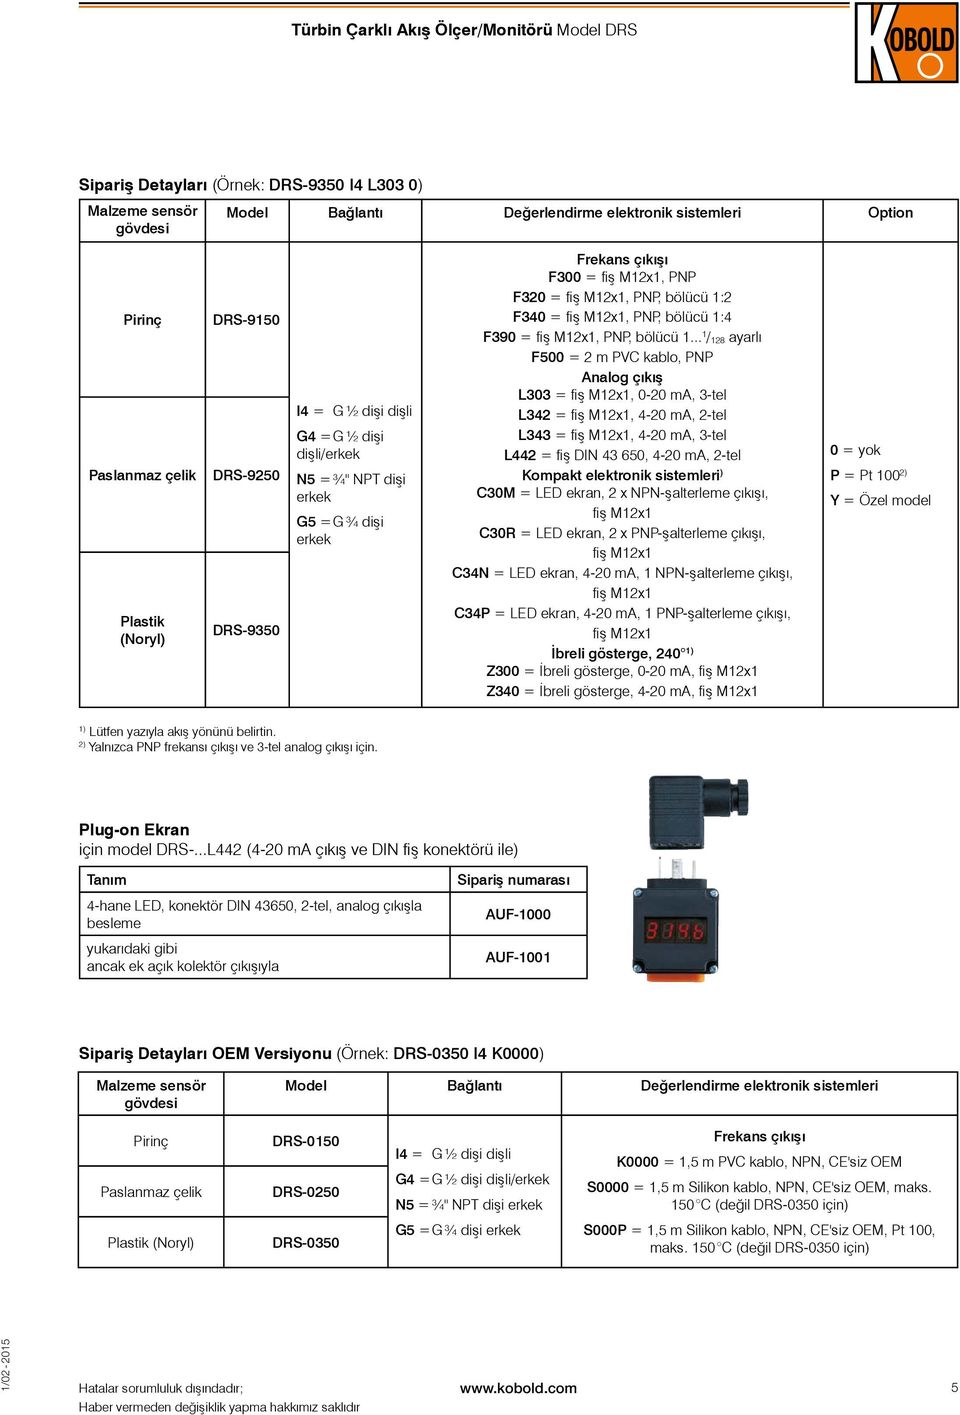 .. / 8 ayarlı F500 = m PVC kablo, PNP Analog çıkış L0 = fiş Mx, 0-0 ma, -tel L = fiş Mx, -0 ma, -tel L = fiş Mx, -0 ma, -tel L = fiş DIN 650, -0 ma, -tel Kompakt elektronik sistemleri ) C0M = LED